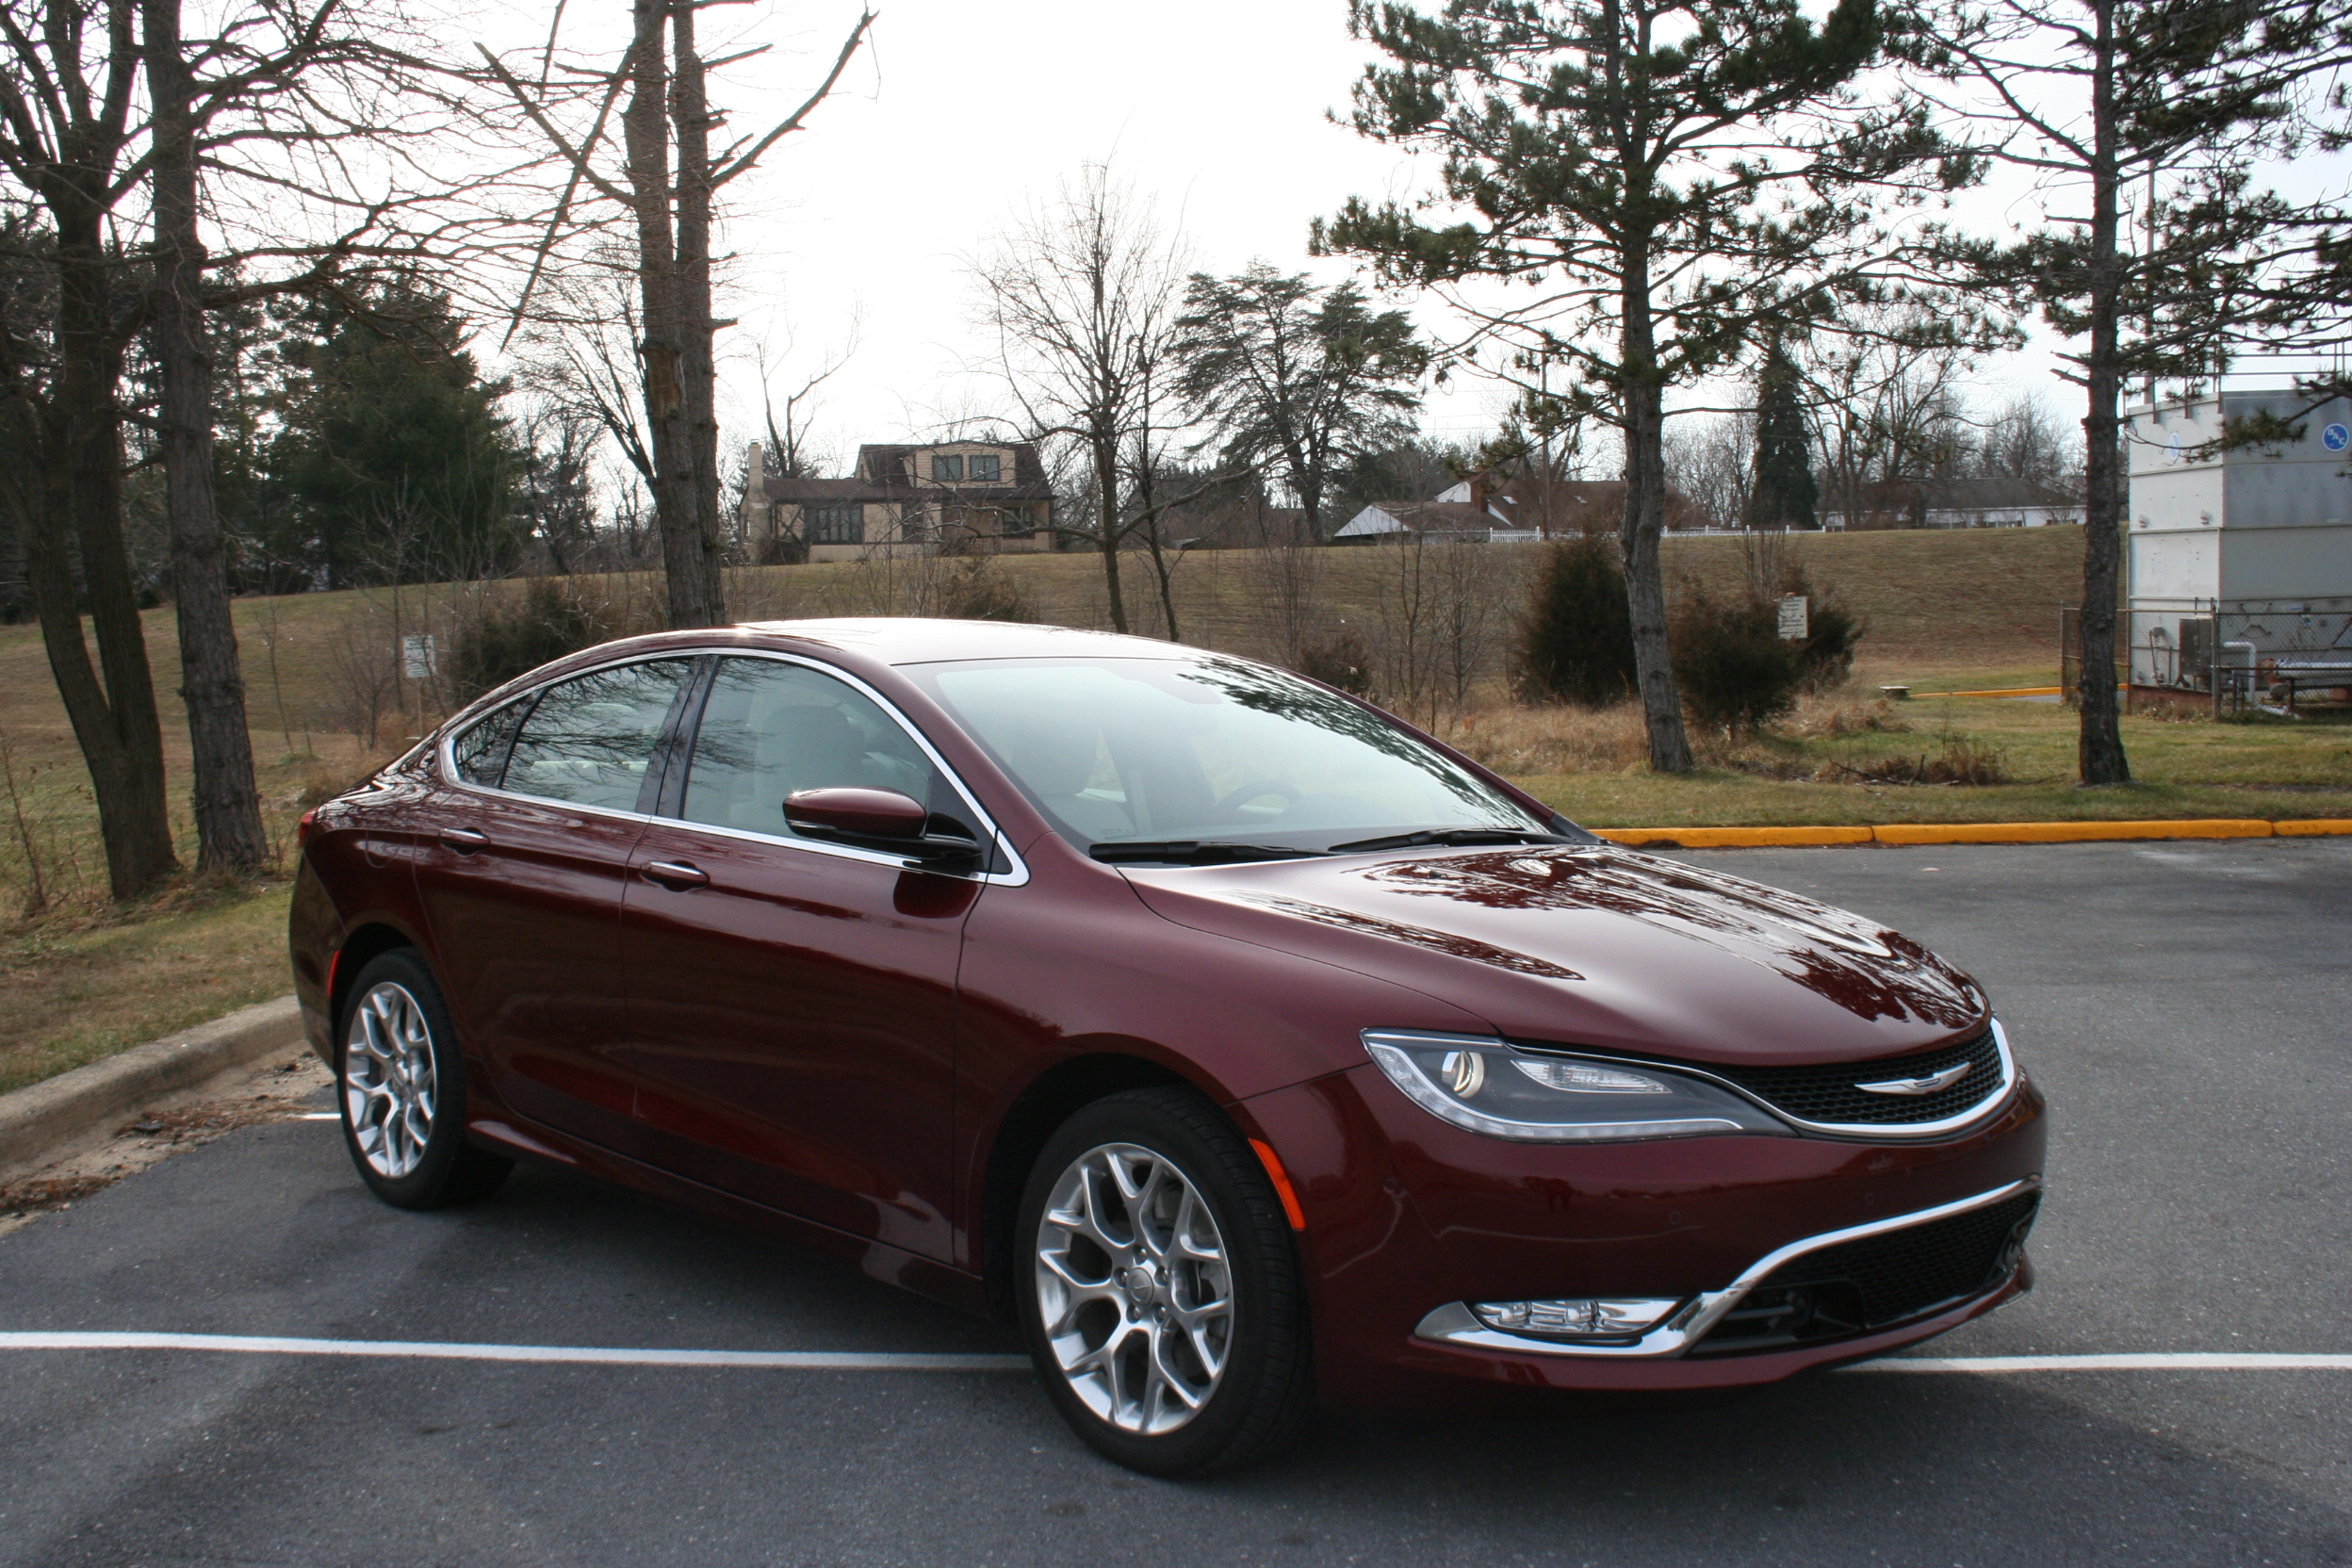 Car Report: Chrysler 200 redesigned for 2015